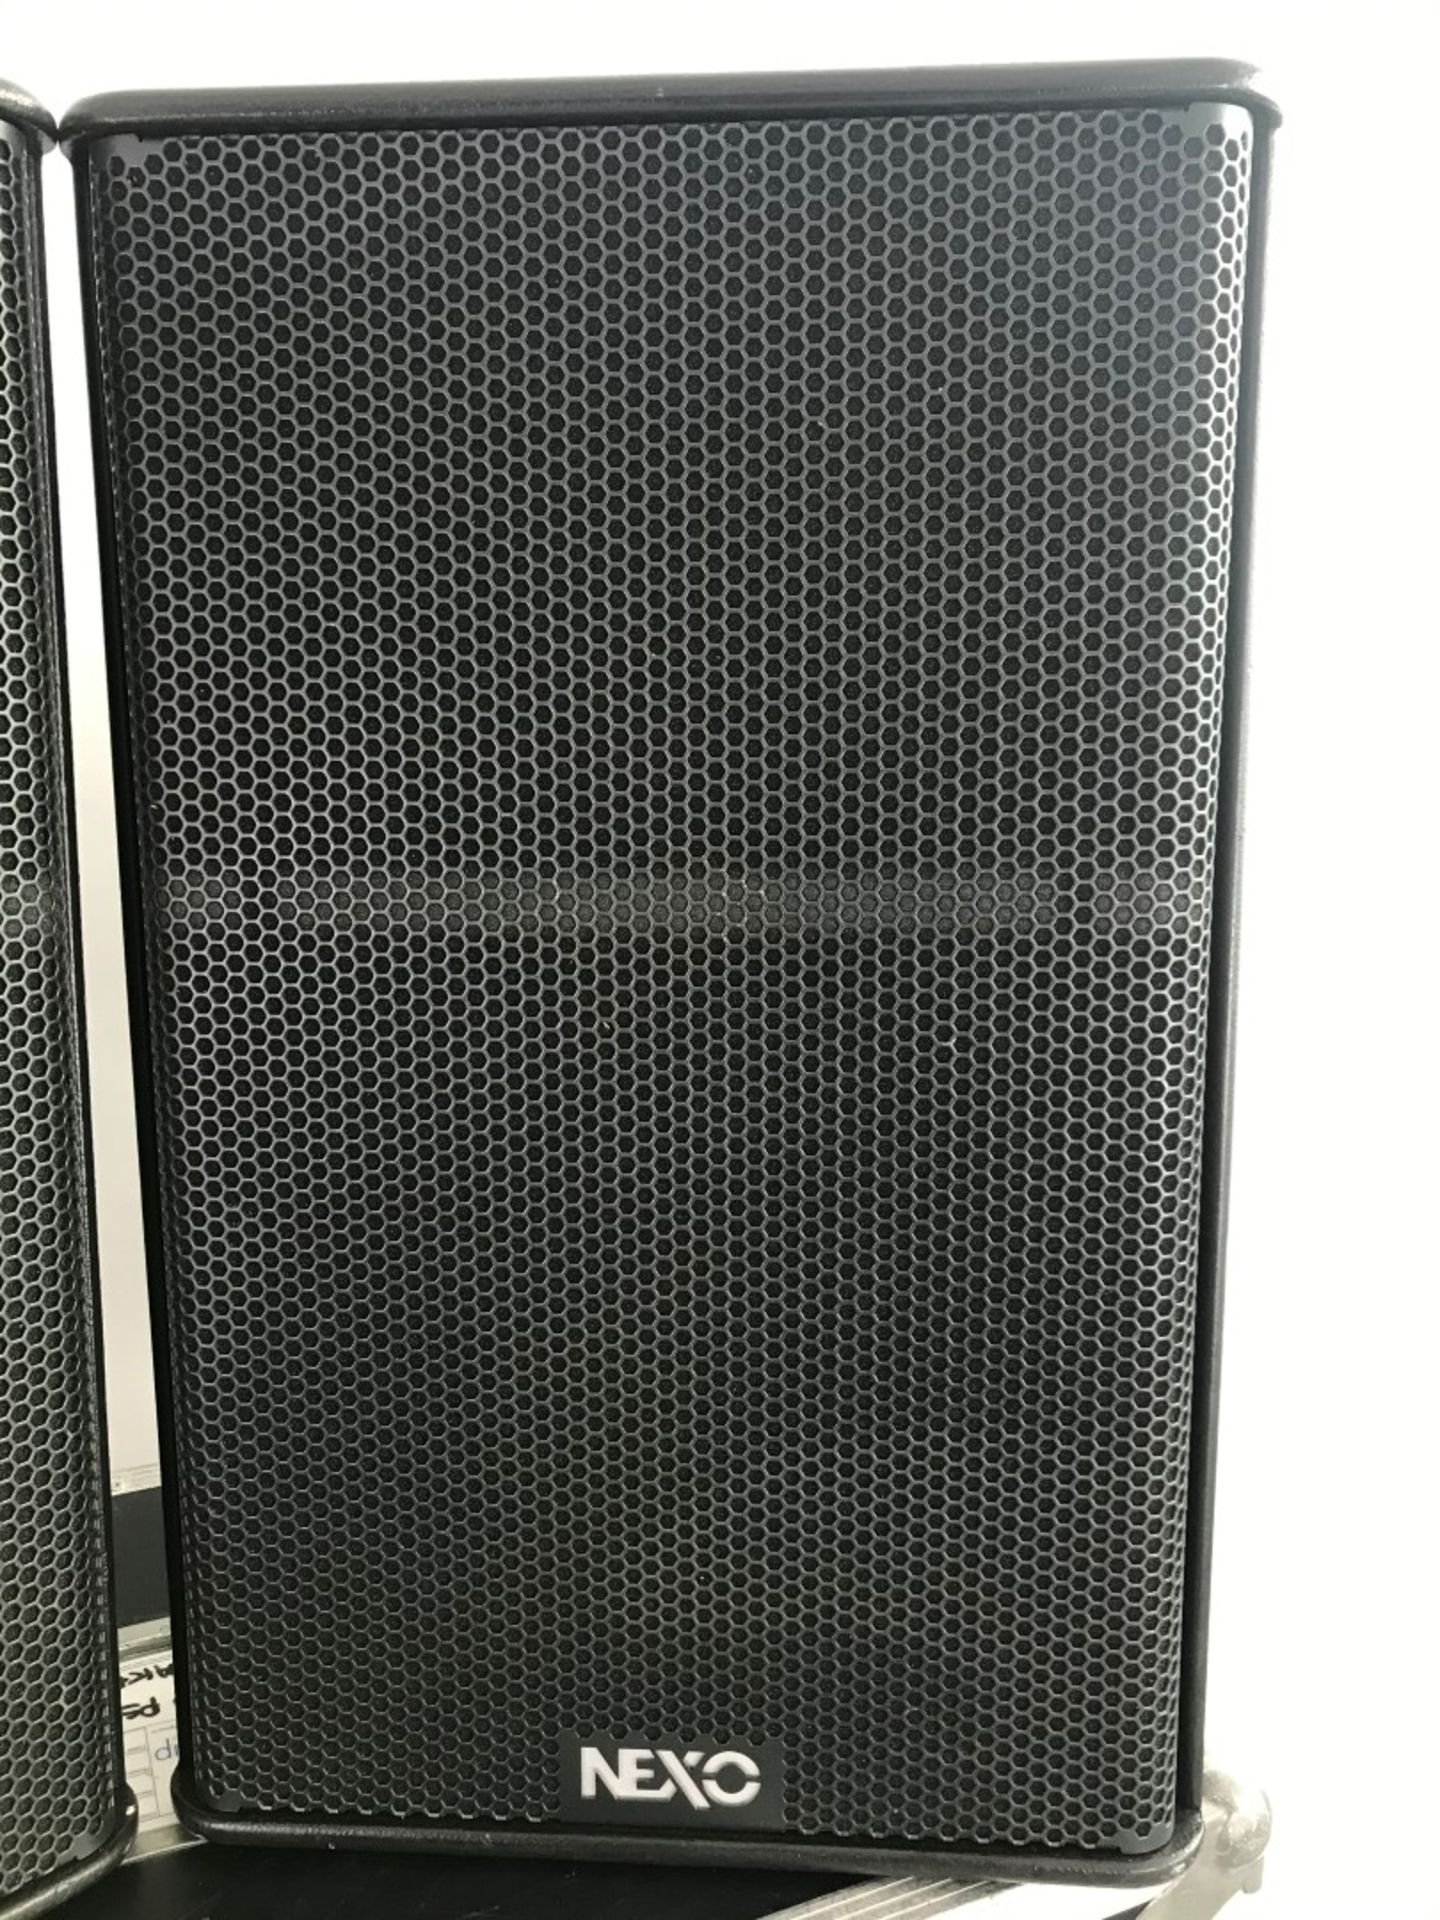 2 x Nexo PS15 R2 Speakers (Pair of) In Dual Flight Case - Ref: 113 - CL581 - Location: Altrincham - Image 2 of 3